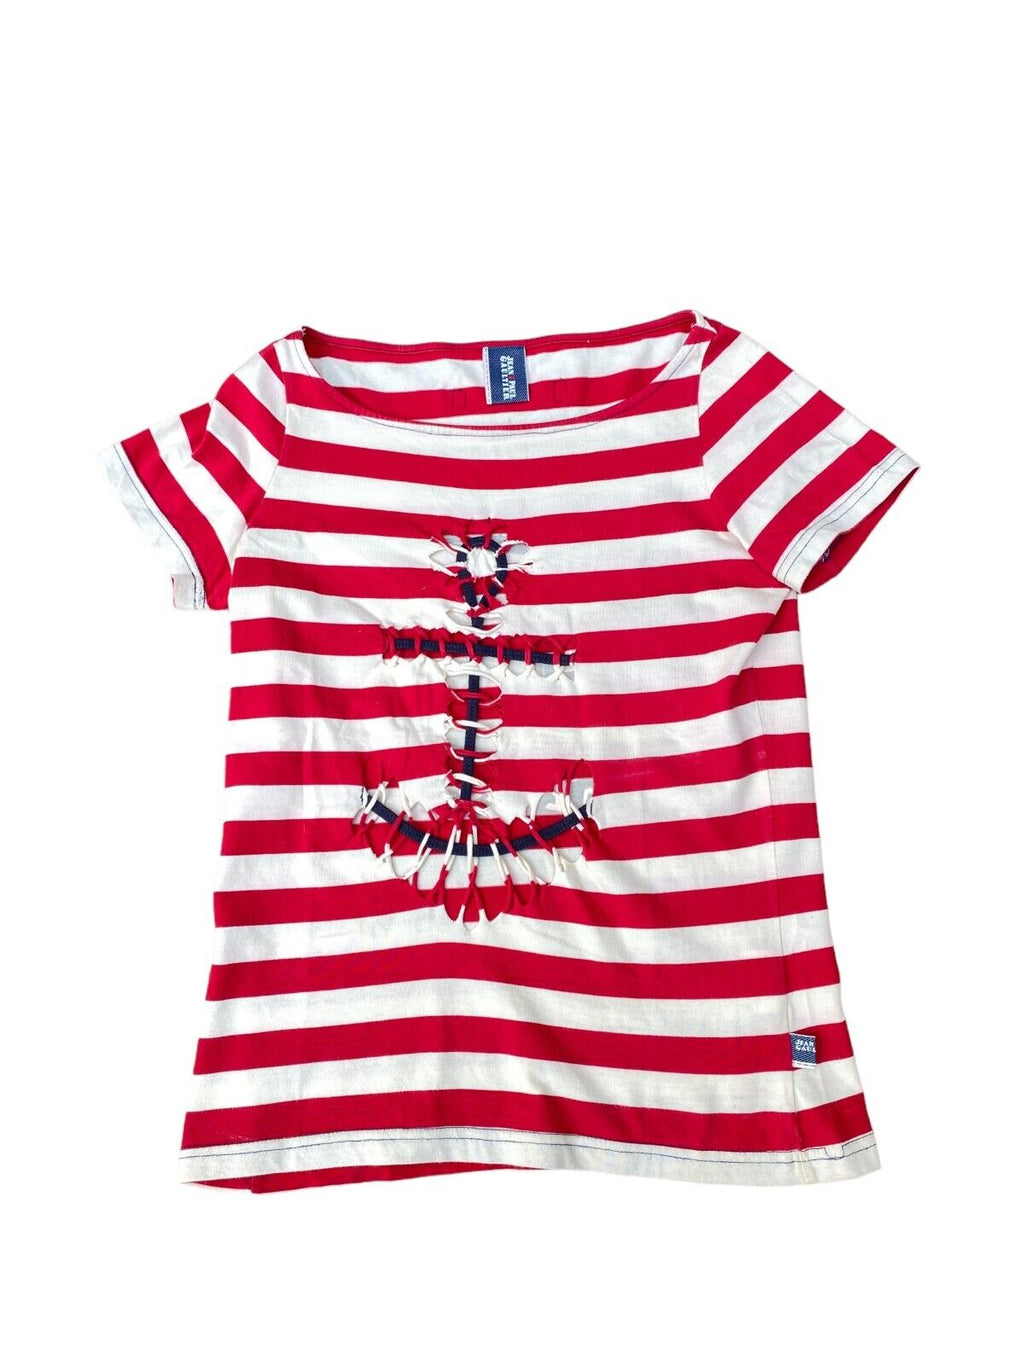 Striped Anchor T-shirt Women Size L fits M to L